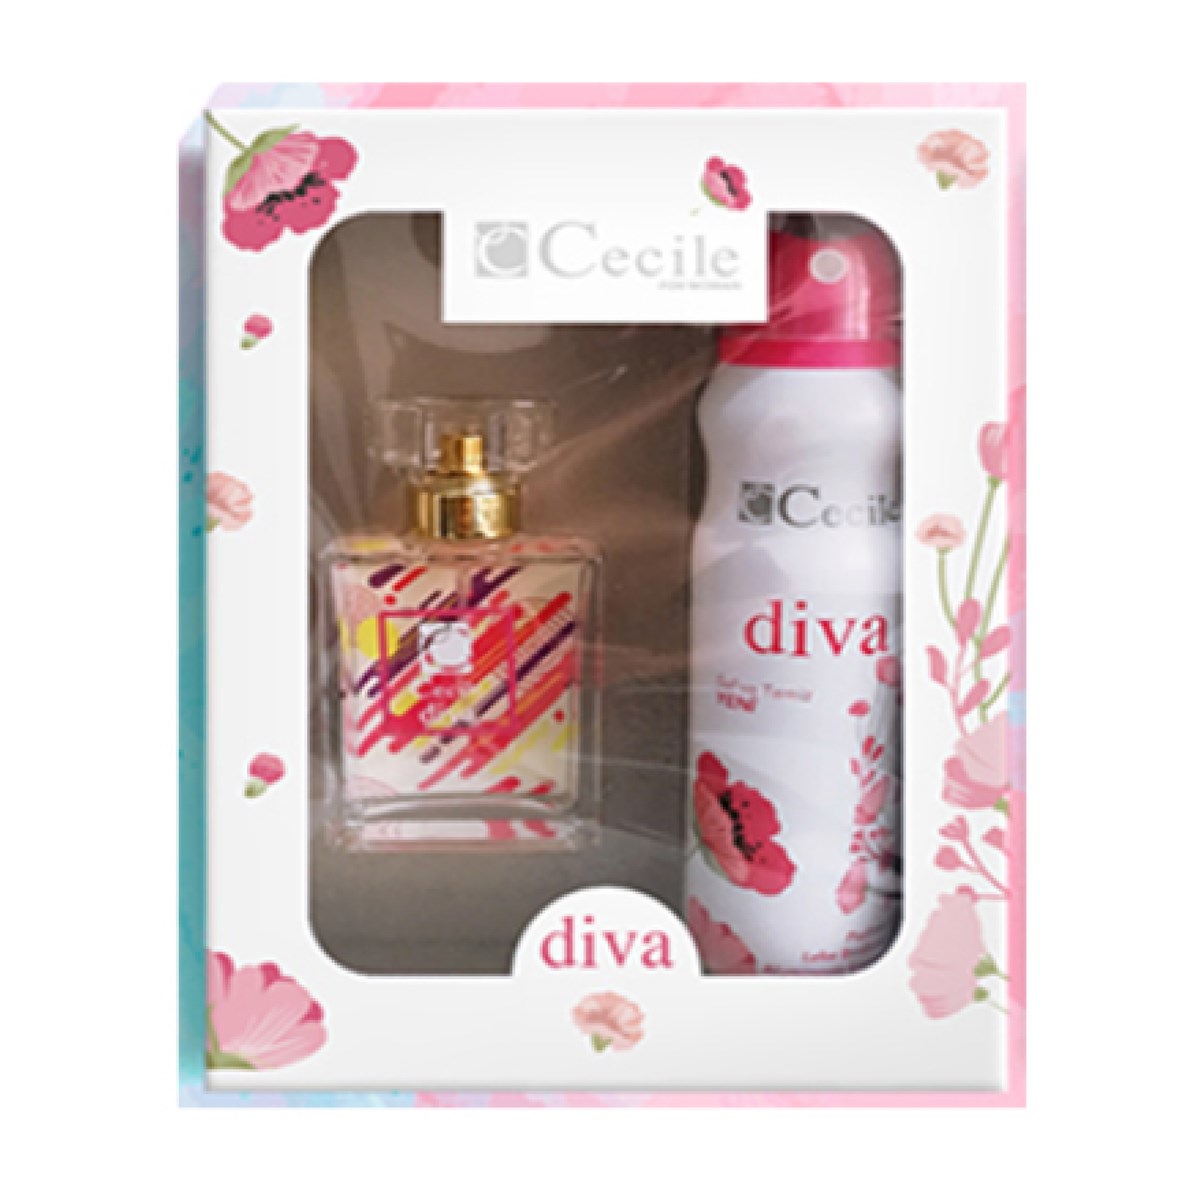 Cecile Diva EDT Parfüm 100ml + Cecile Diva Deodorant 150 ml - Platin